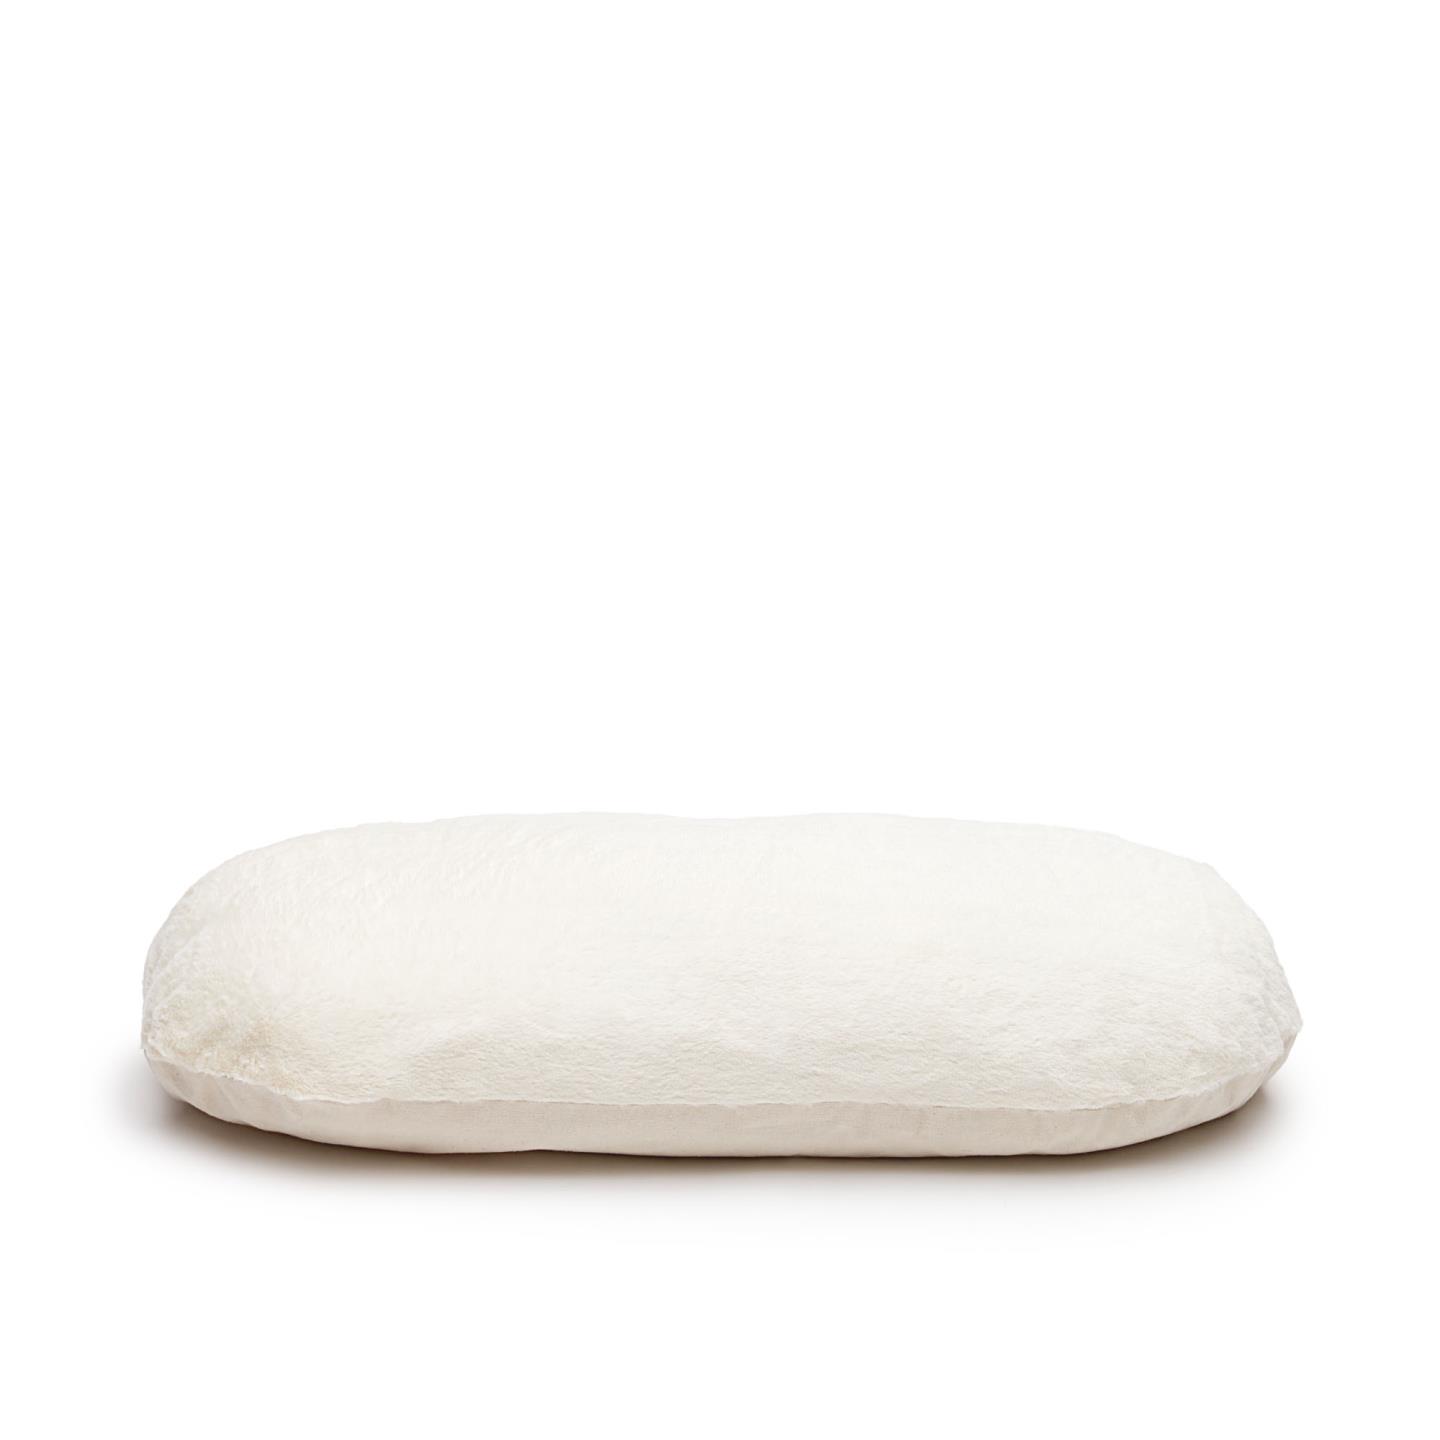 #3 - LAFORMA Codie kæledyrspude, oval - hvid pels bomuld/polyester (80x50)